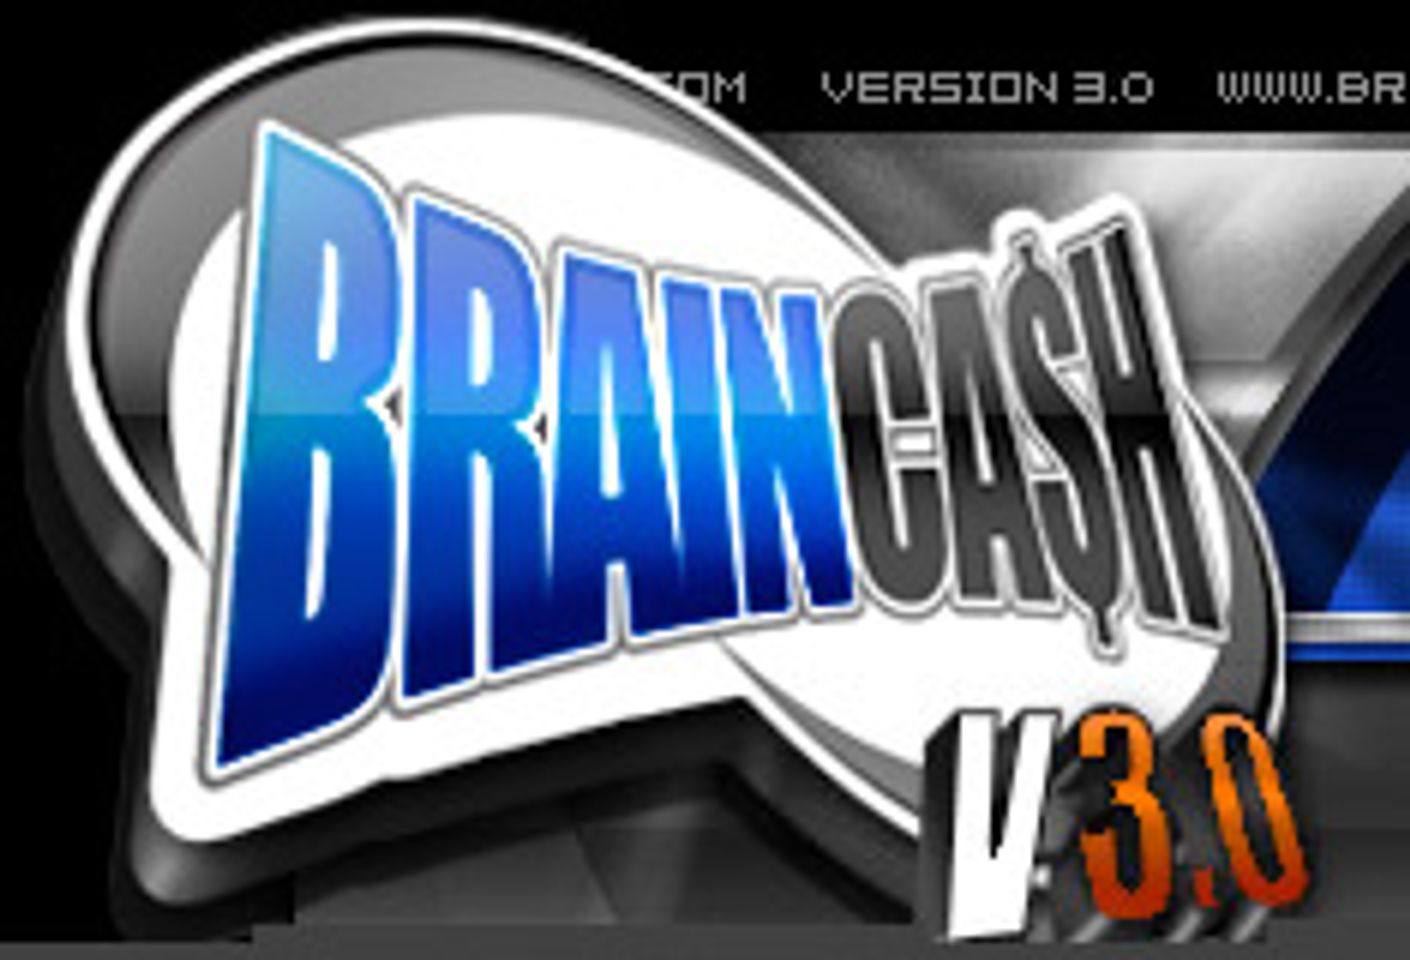 Braincash, Mike John Launch JizzMouthWash.com